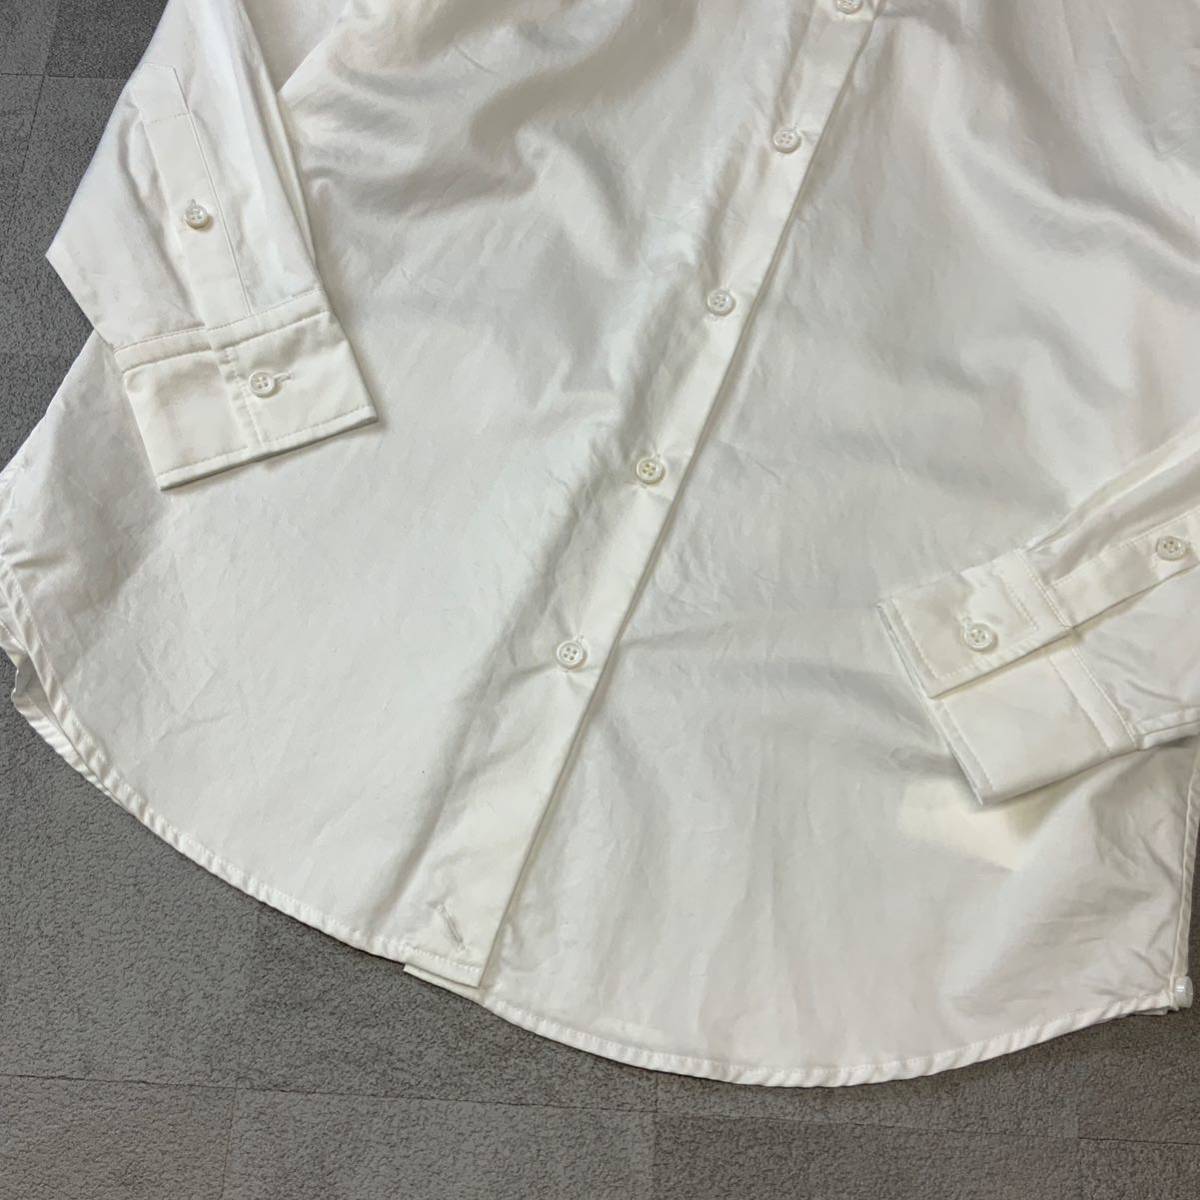  new goods tag attaching BLENHEIMb Len partition m oversize shirt lady's S size largish white Italy made cloth dress shirt 